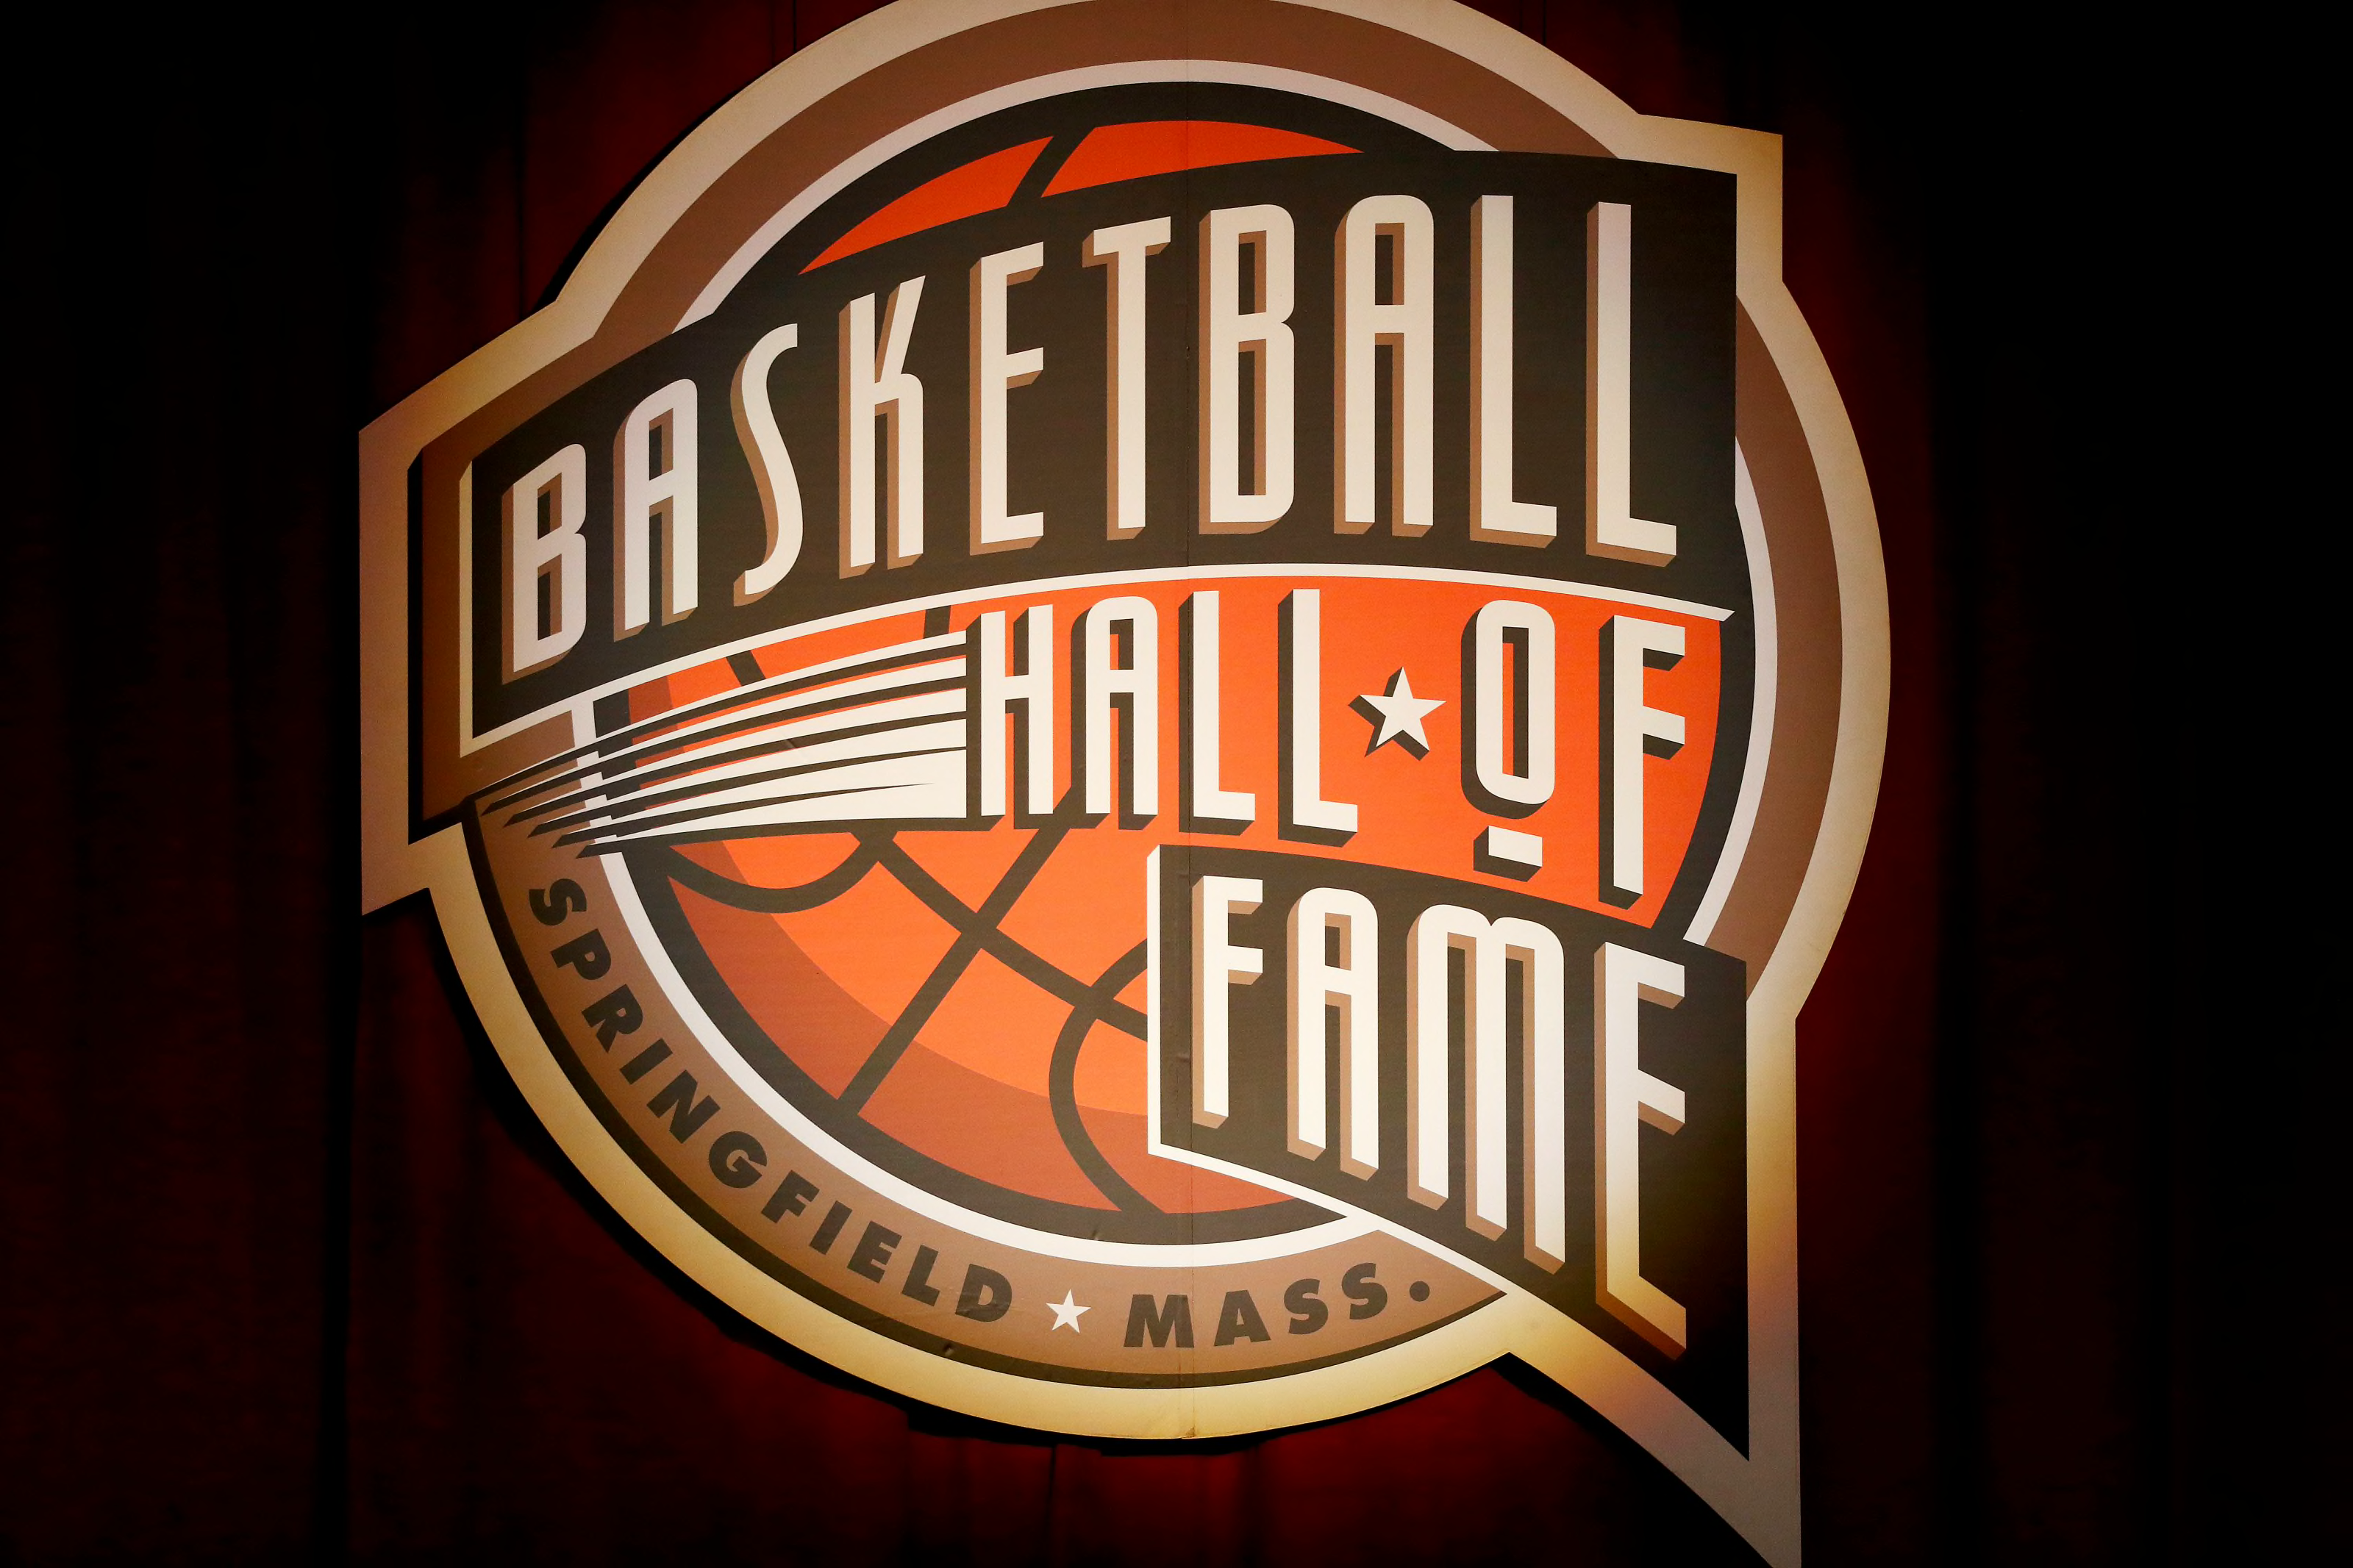 The NBA should rebuild the Basketball Hall of Fame